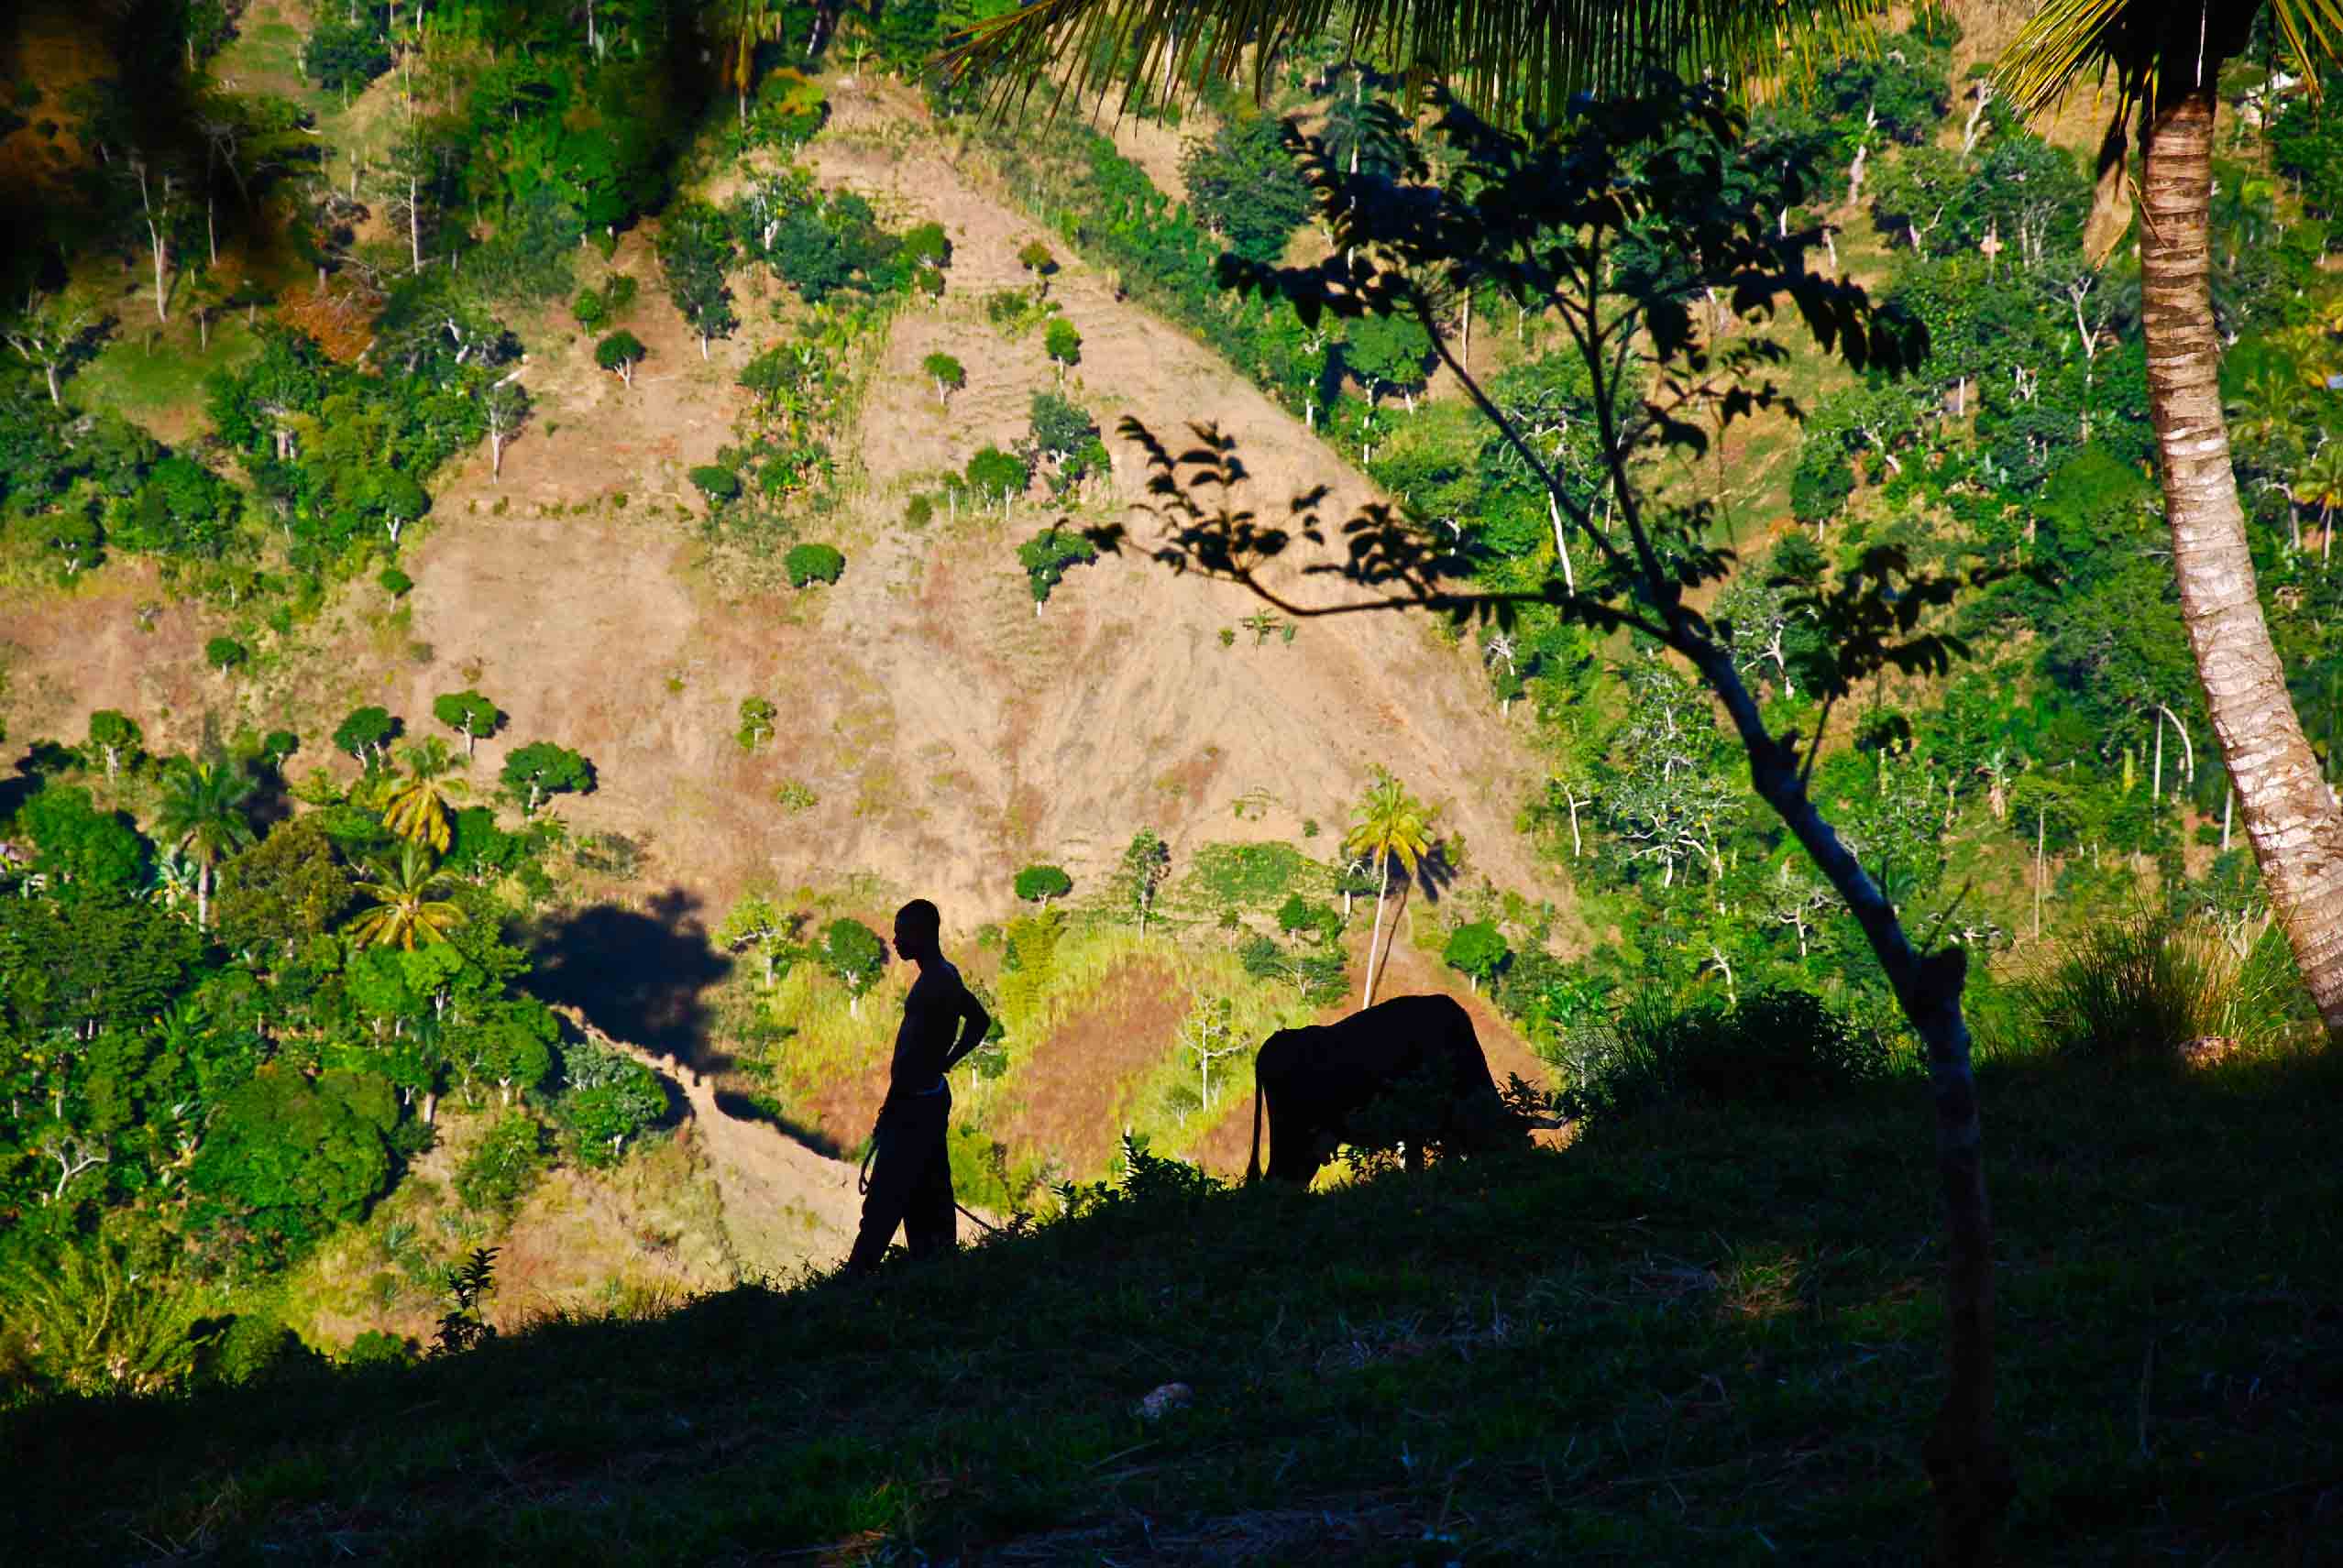 Morne érodé, paysan gardant son troupeau, Haïti. E. Malézieux, © Cirad.